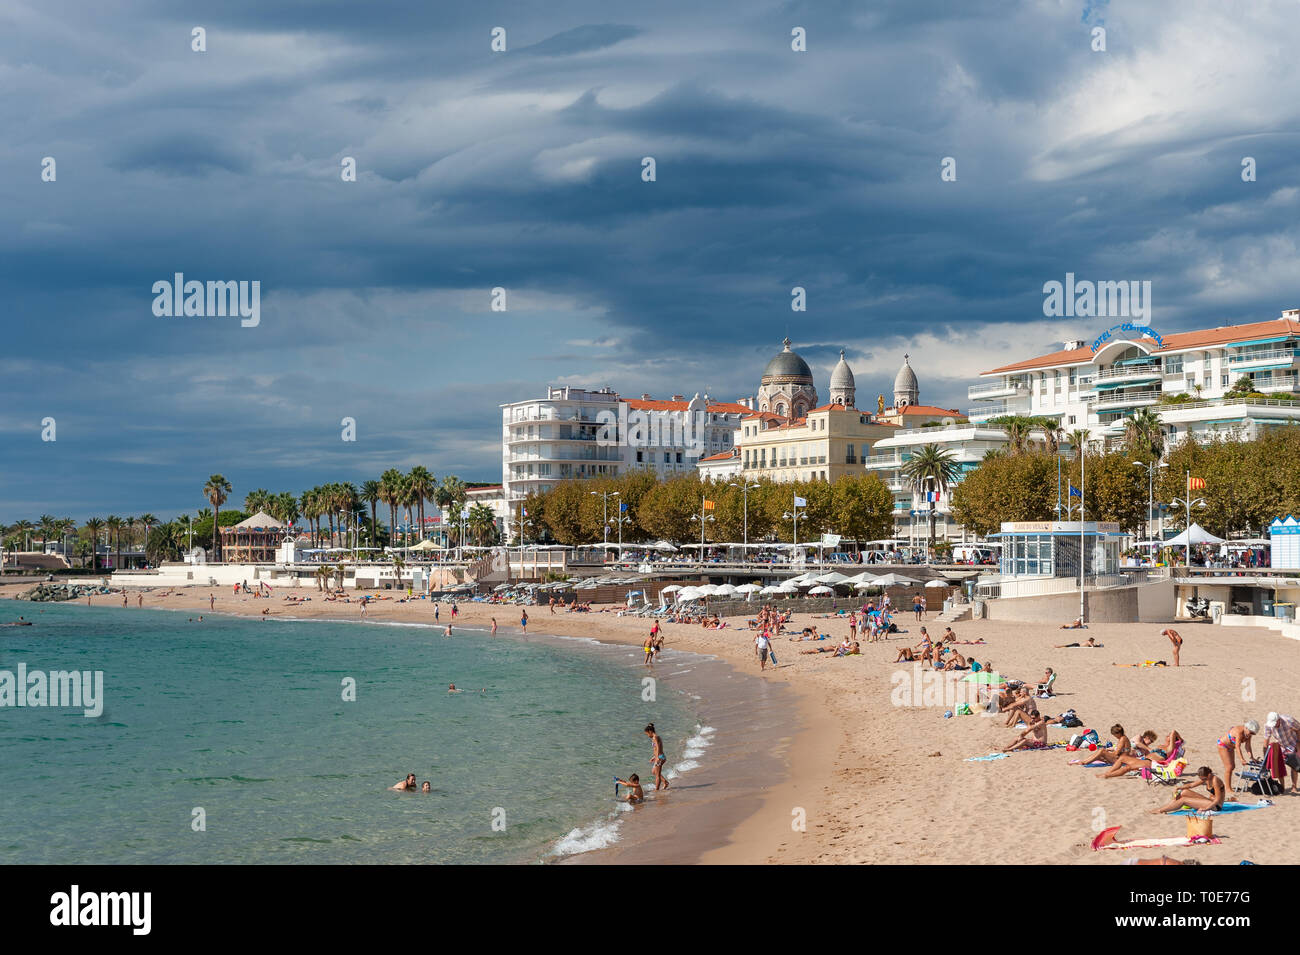 Strand und Stadtbild, Saint-Raphael, Var, Provence-Alpes-Cote d'Azur, Frankreich, Europa Stockfoto